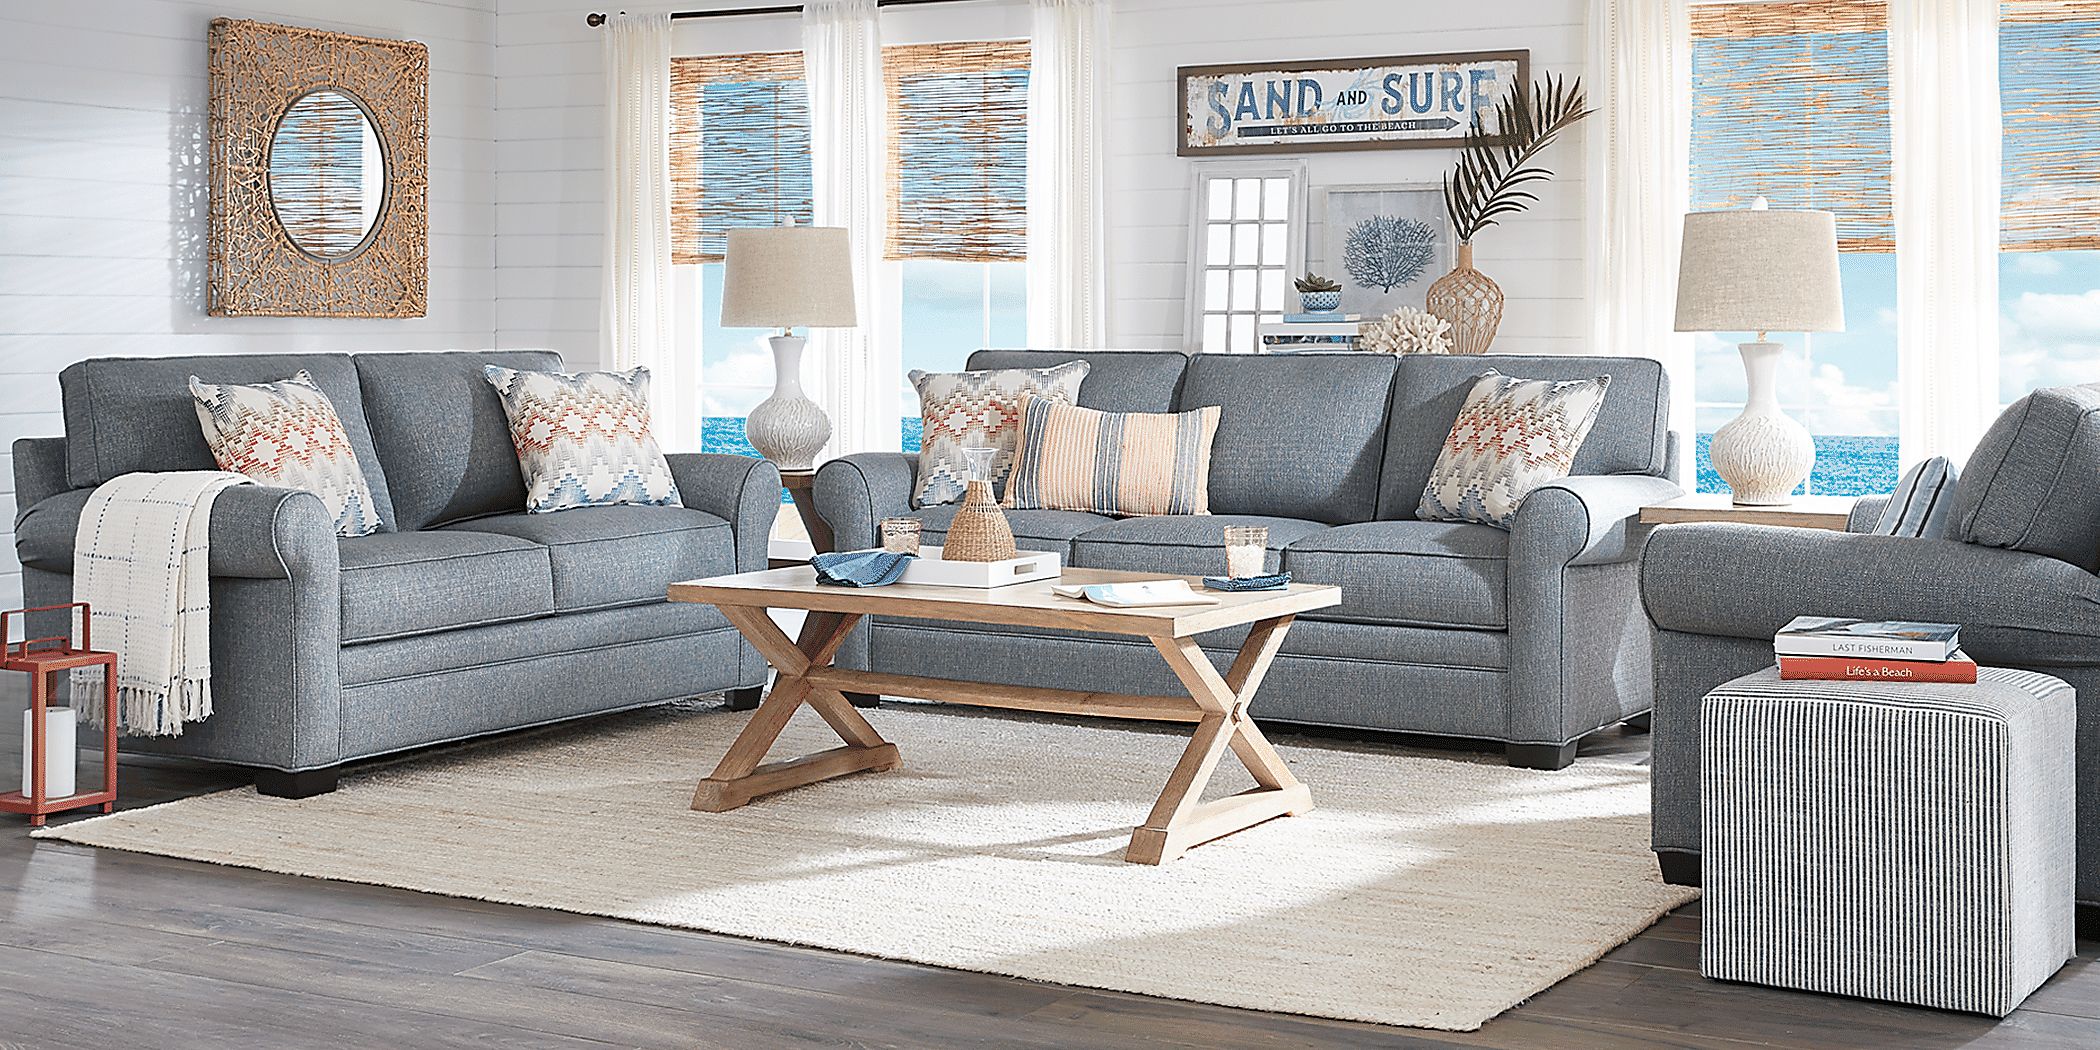 Cindy Crawford Home Bellingham Denim Textured Sofa